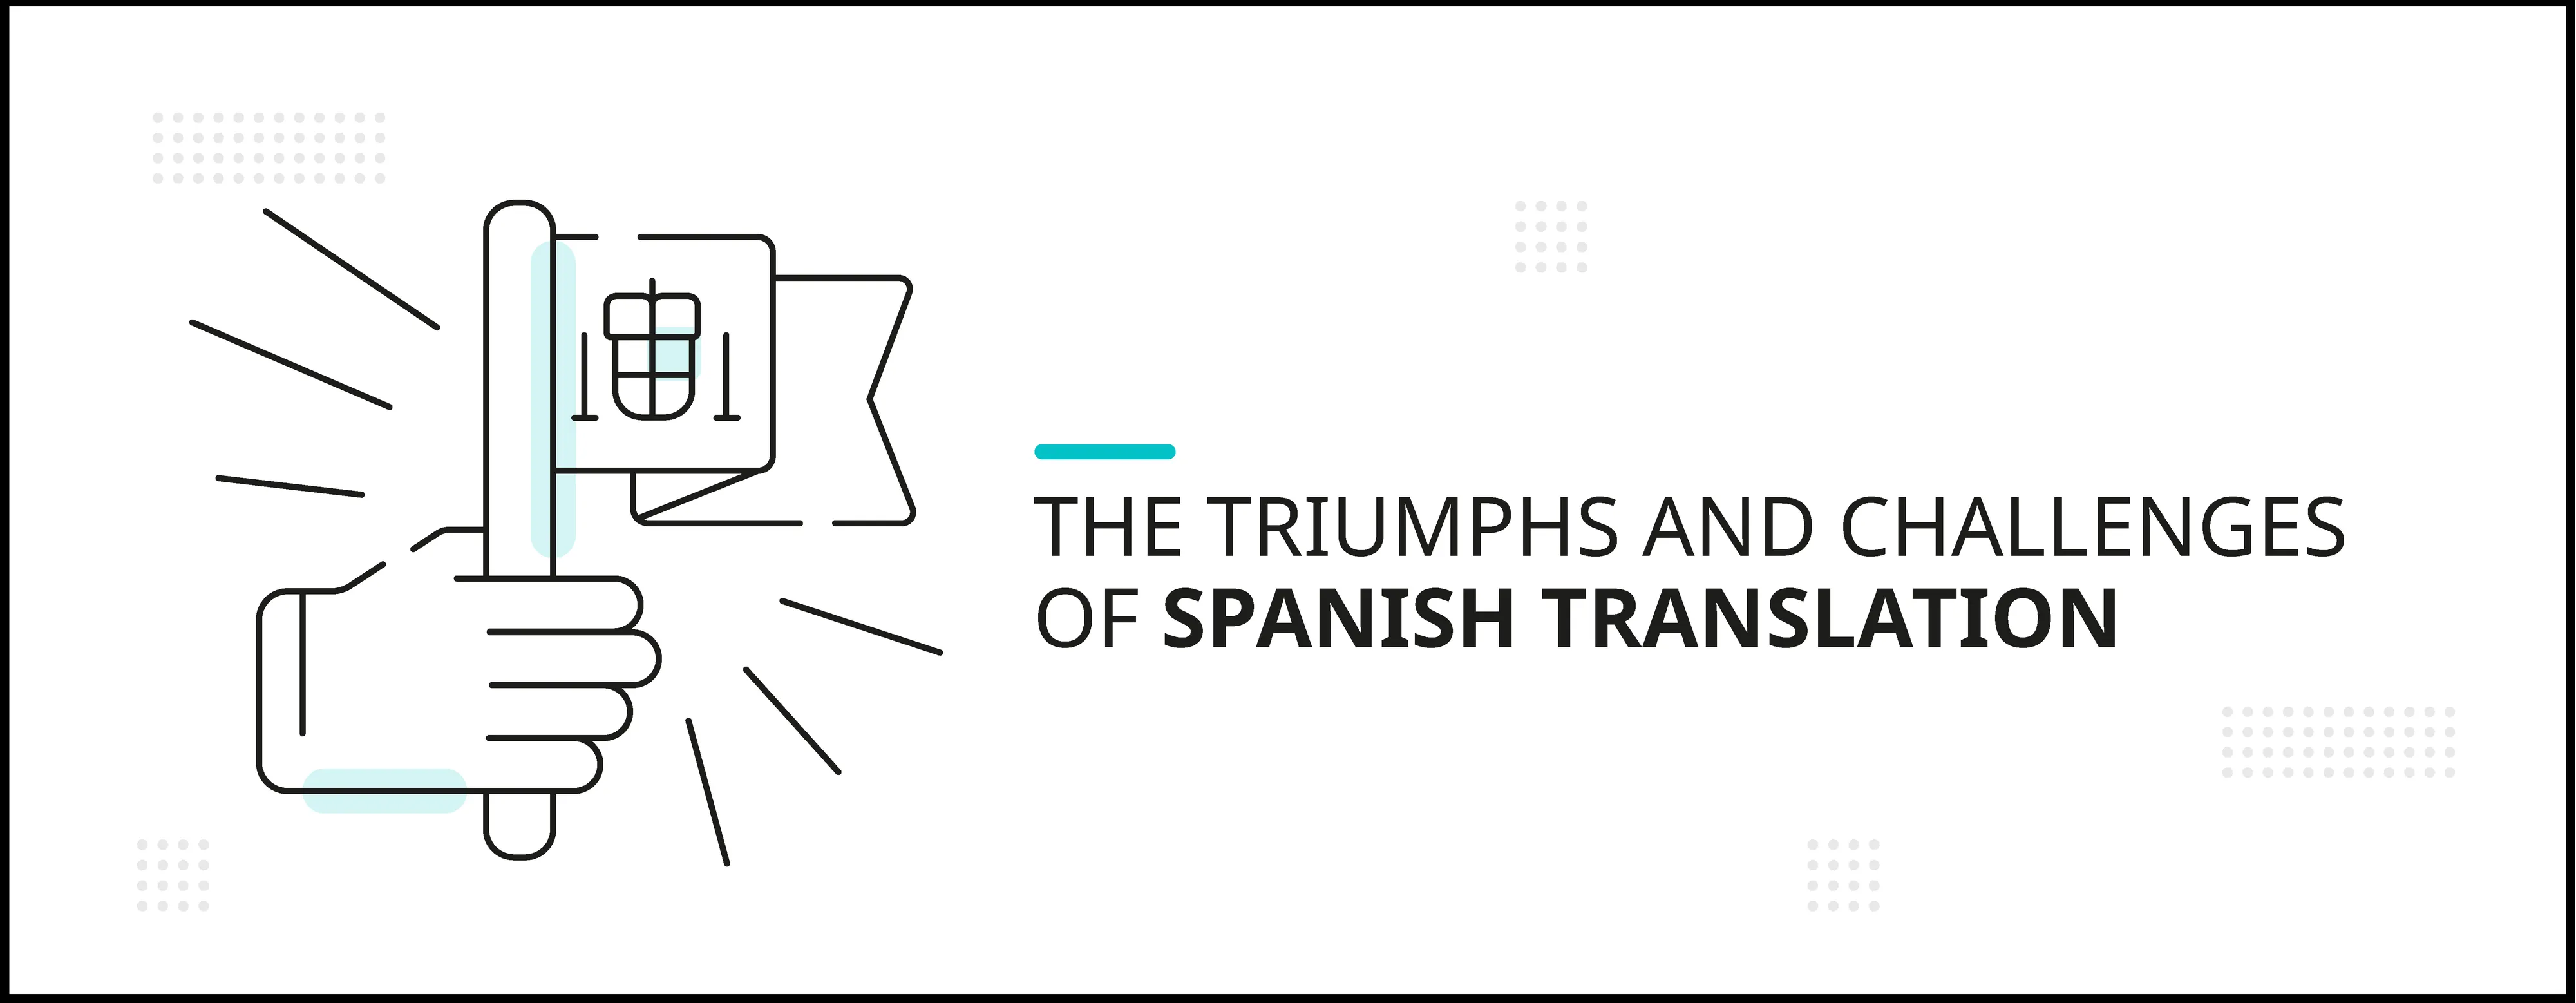 Professional Spanish Translation